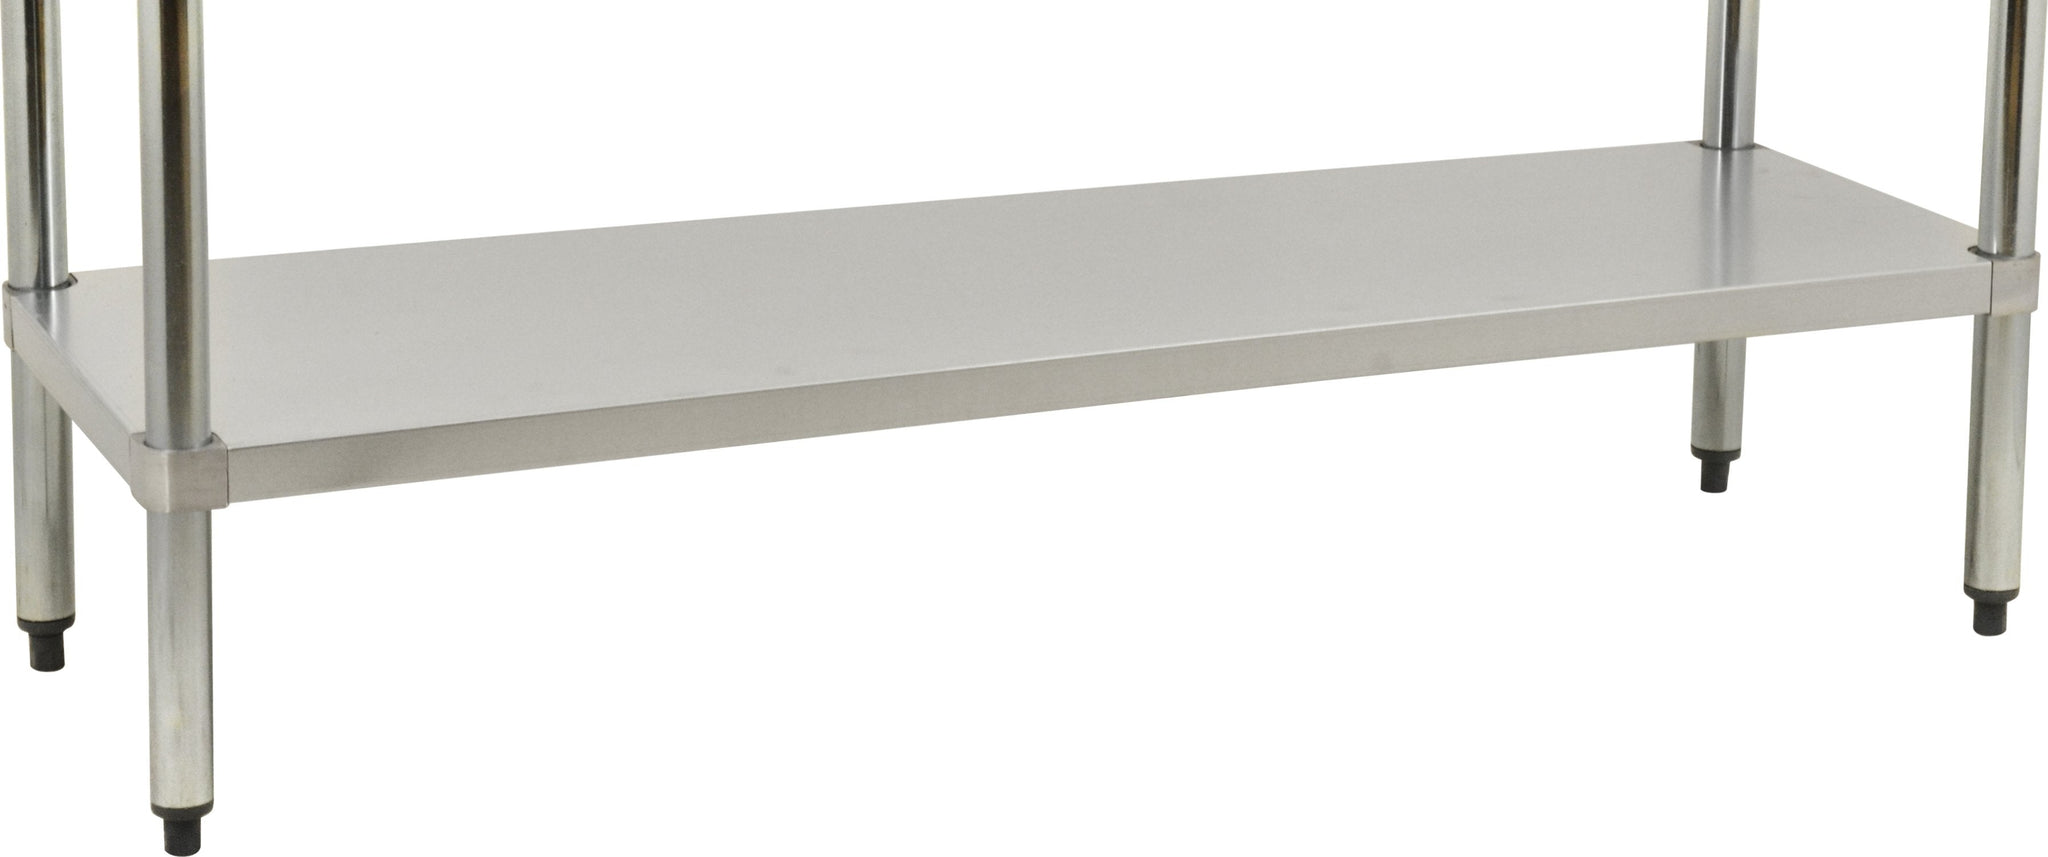 Omcan - 30” x 84” Stainless Steel Undershelf For Work Table - 21620